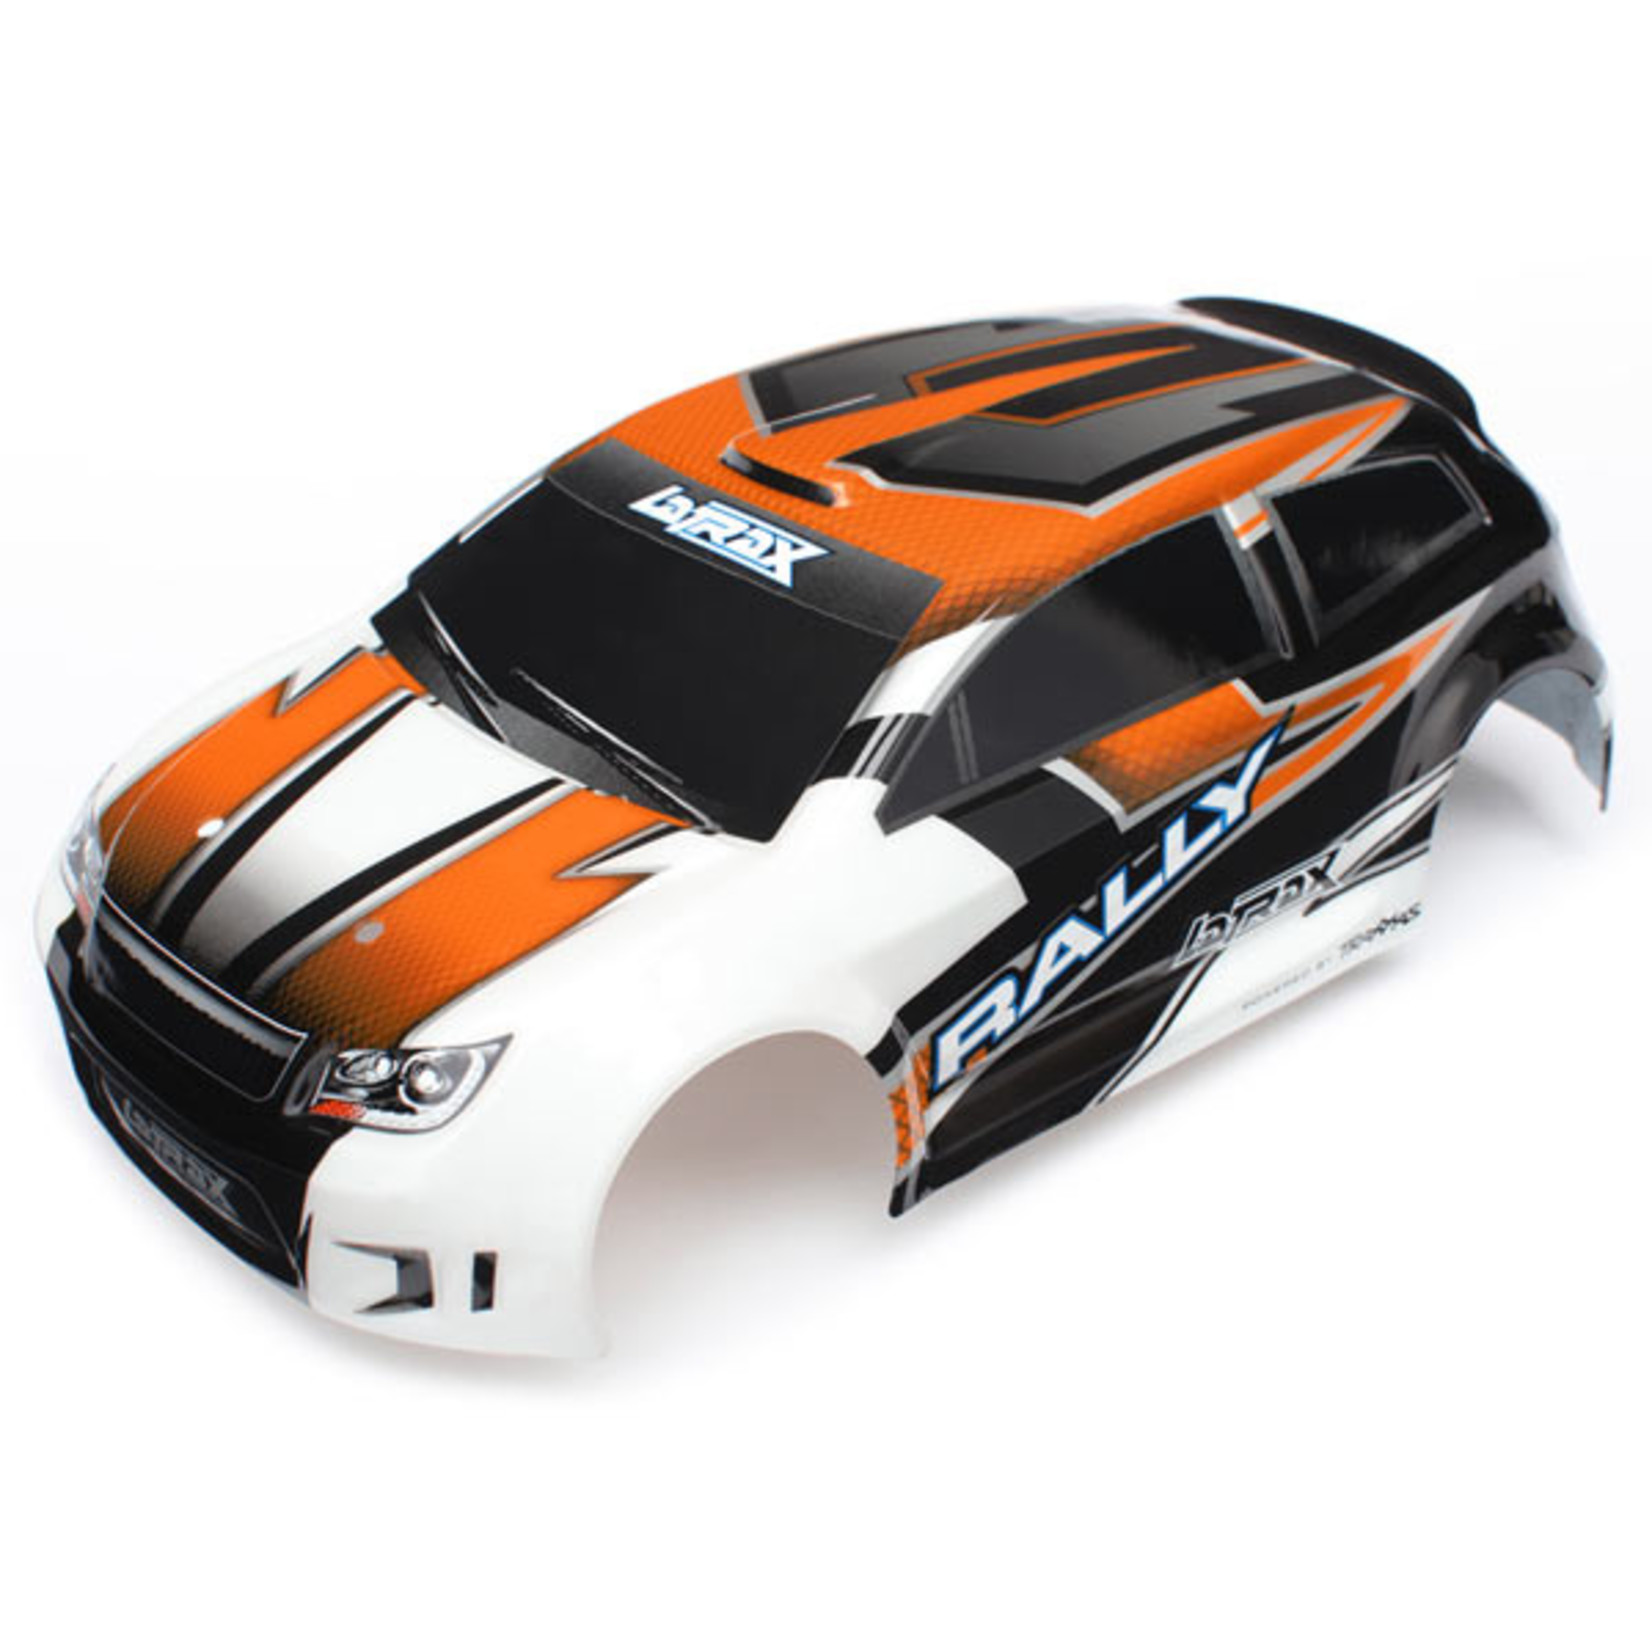 Traxxas 7517 - Body, LaTrax Rally, orange (painted)/ decal